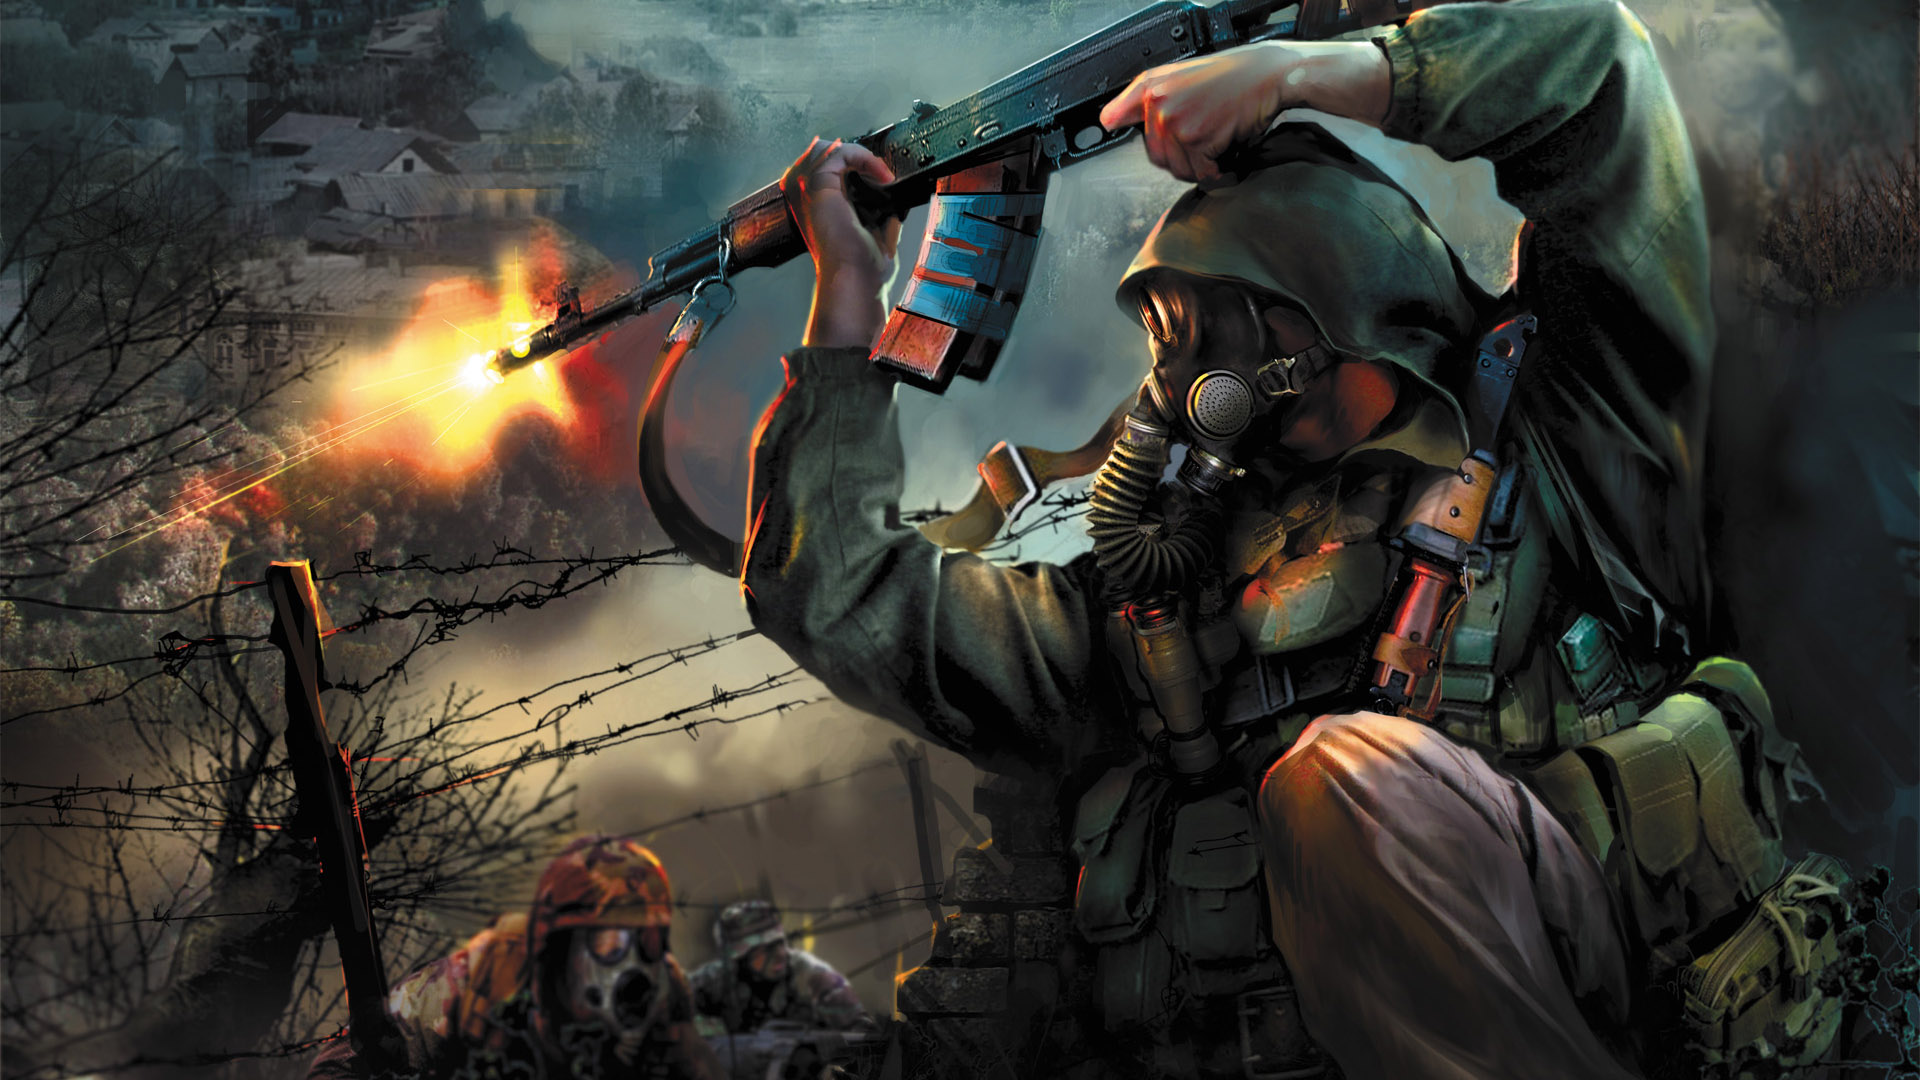 fonds dcran jeux vido de guerre   war games wallpapers